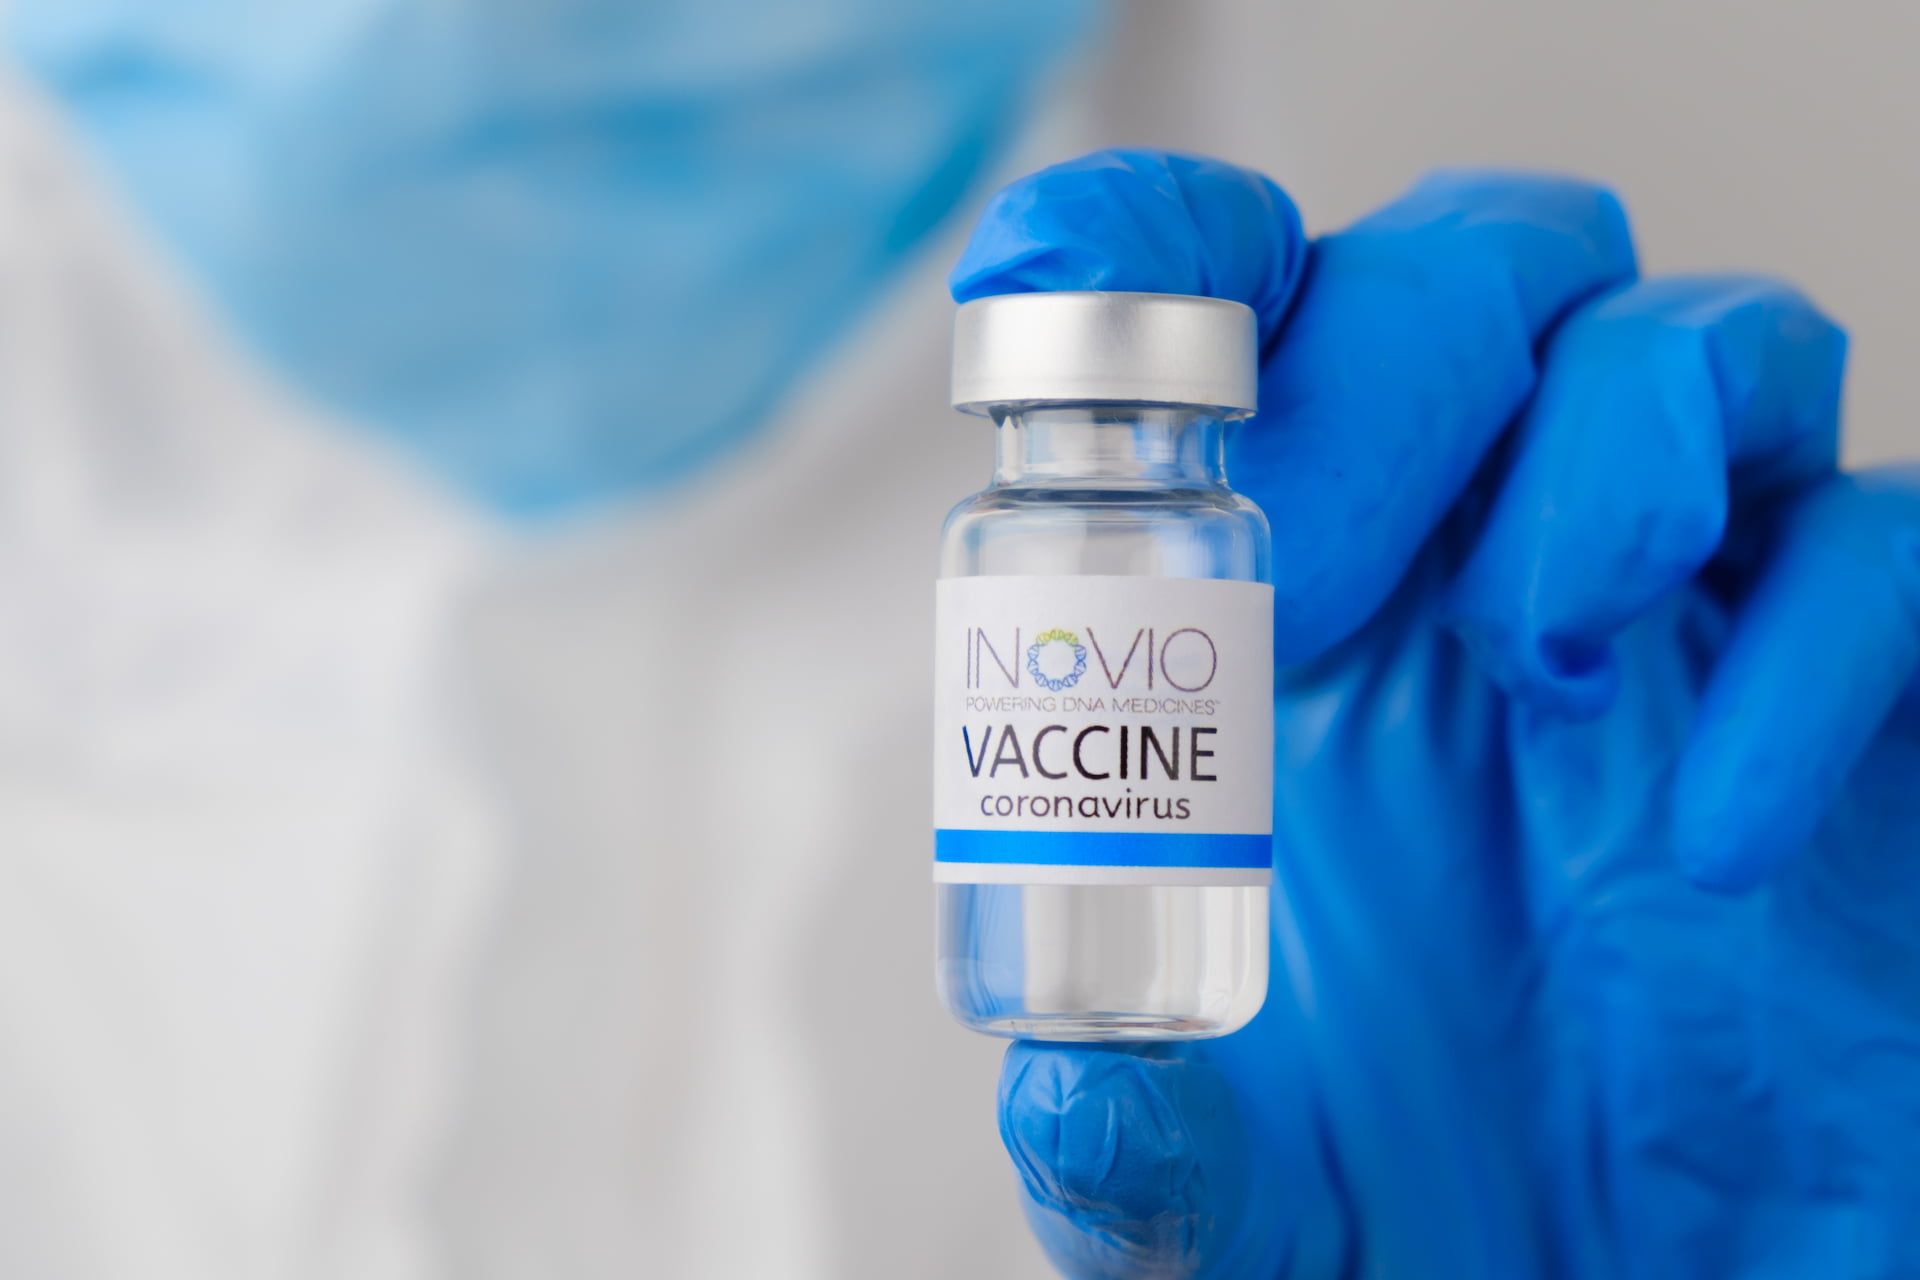 Inovio Coronavirus Vaccine: Why We Should Pay Close Attention to Inovio During the COVID-19 Vaccine Race